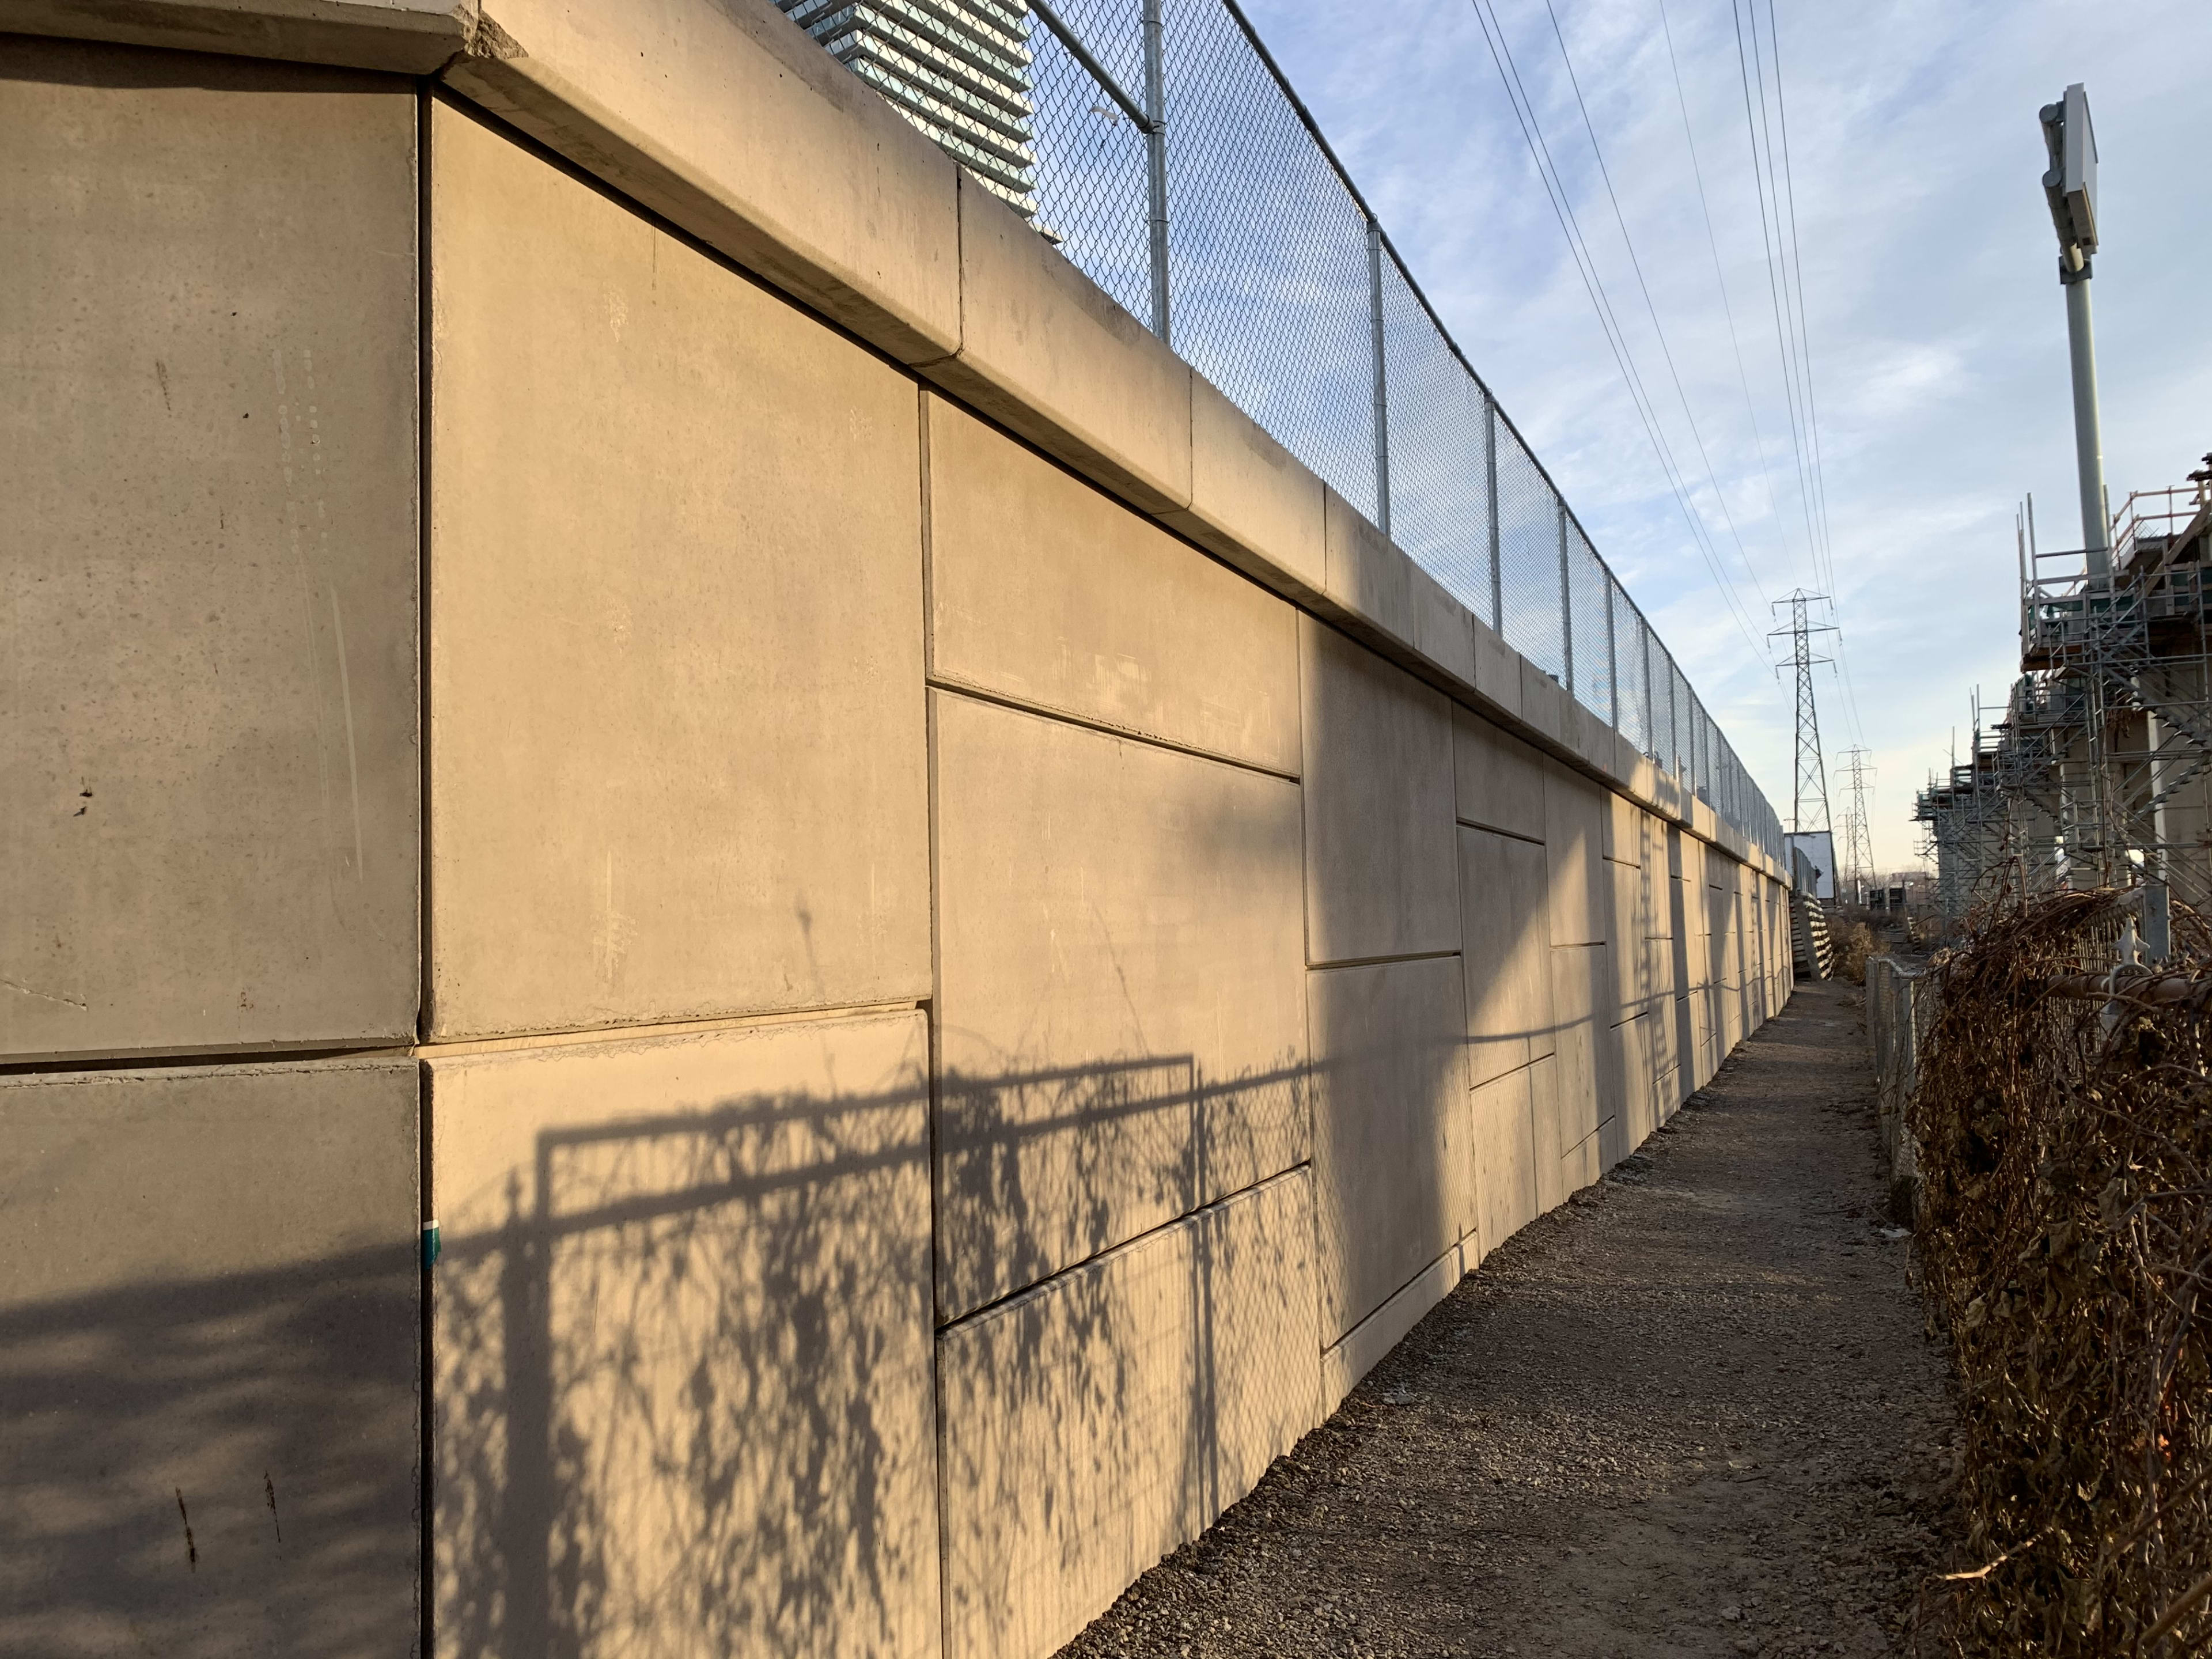 A concrete retaining wall